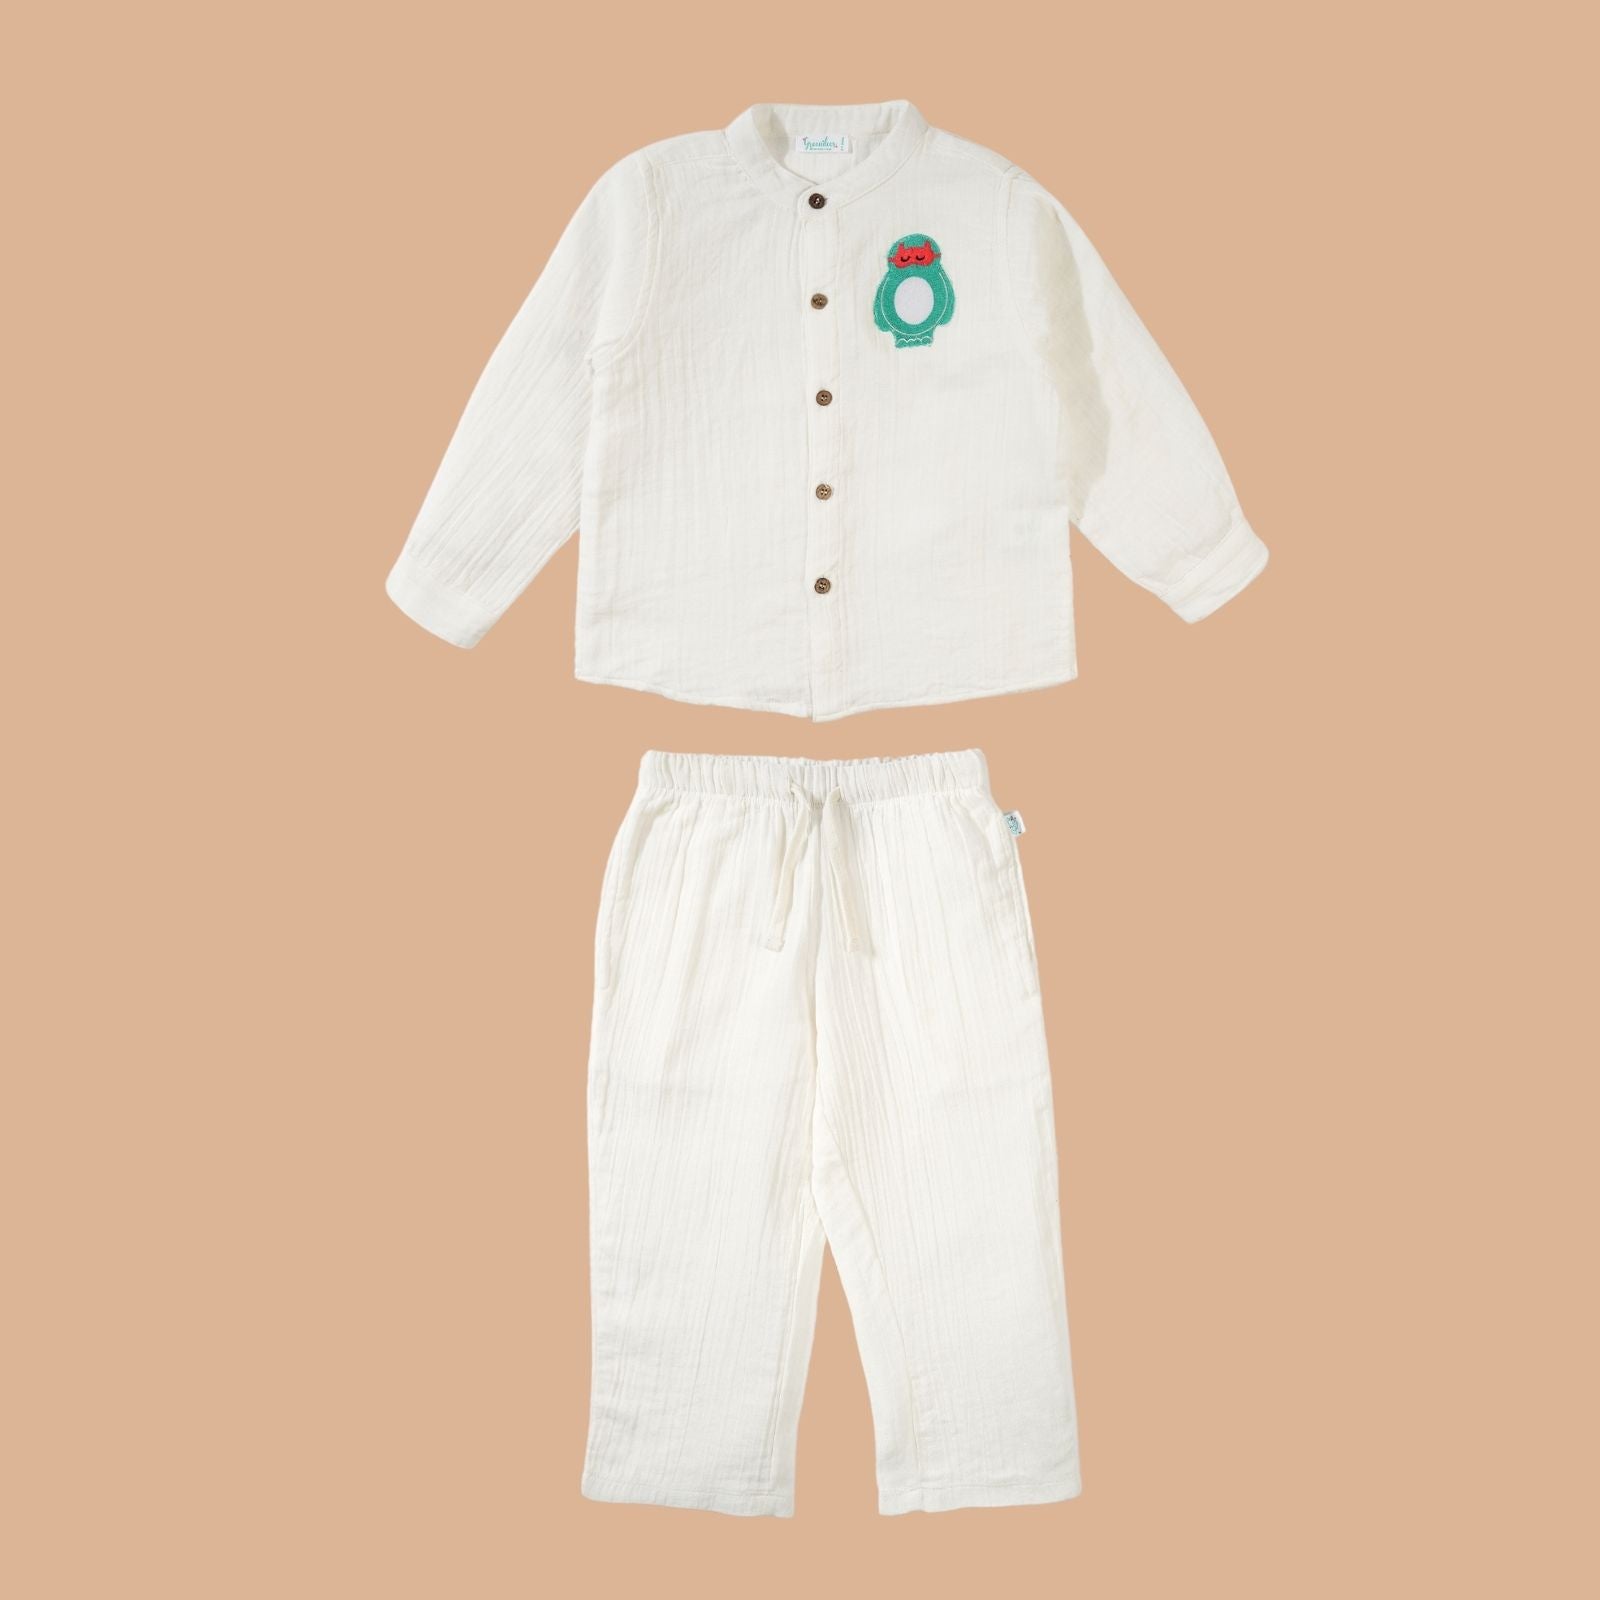 Greendeer White Shirt Cotton Cord Set